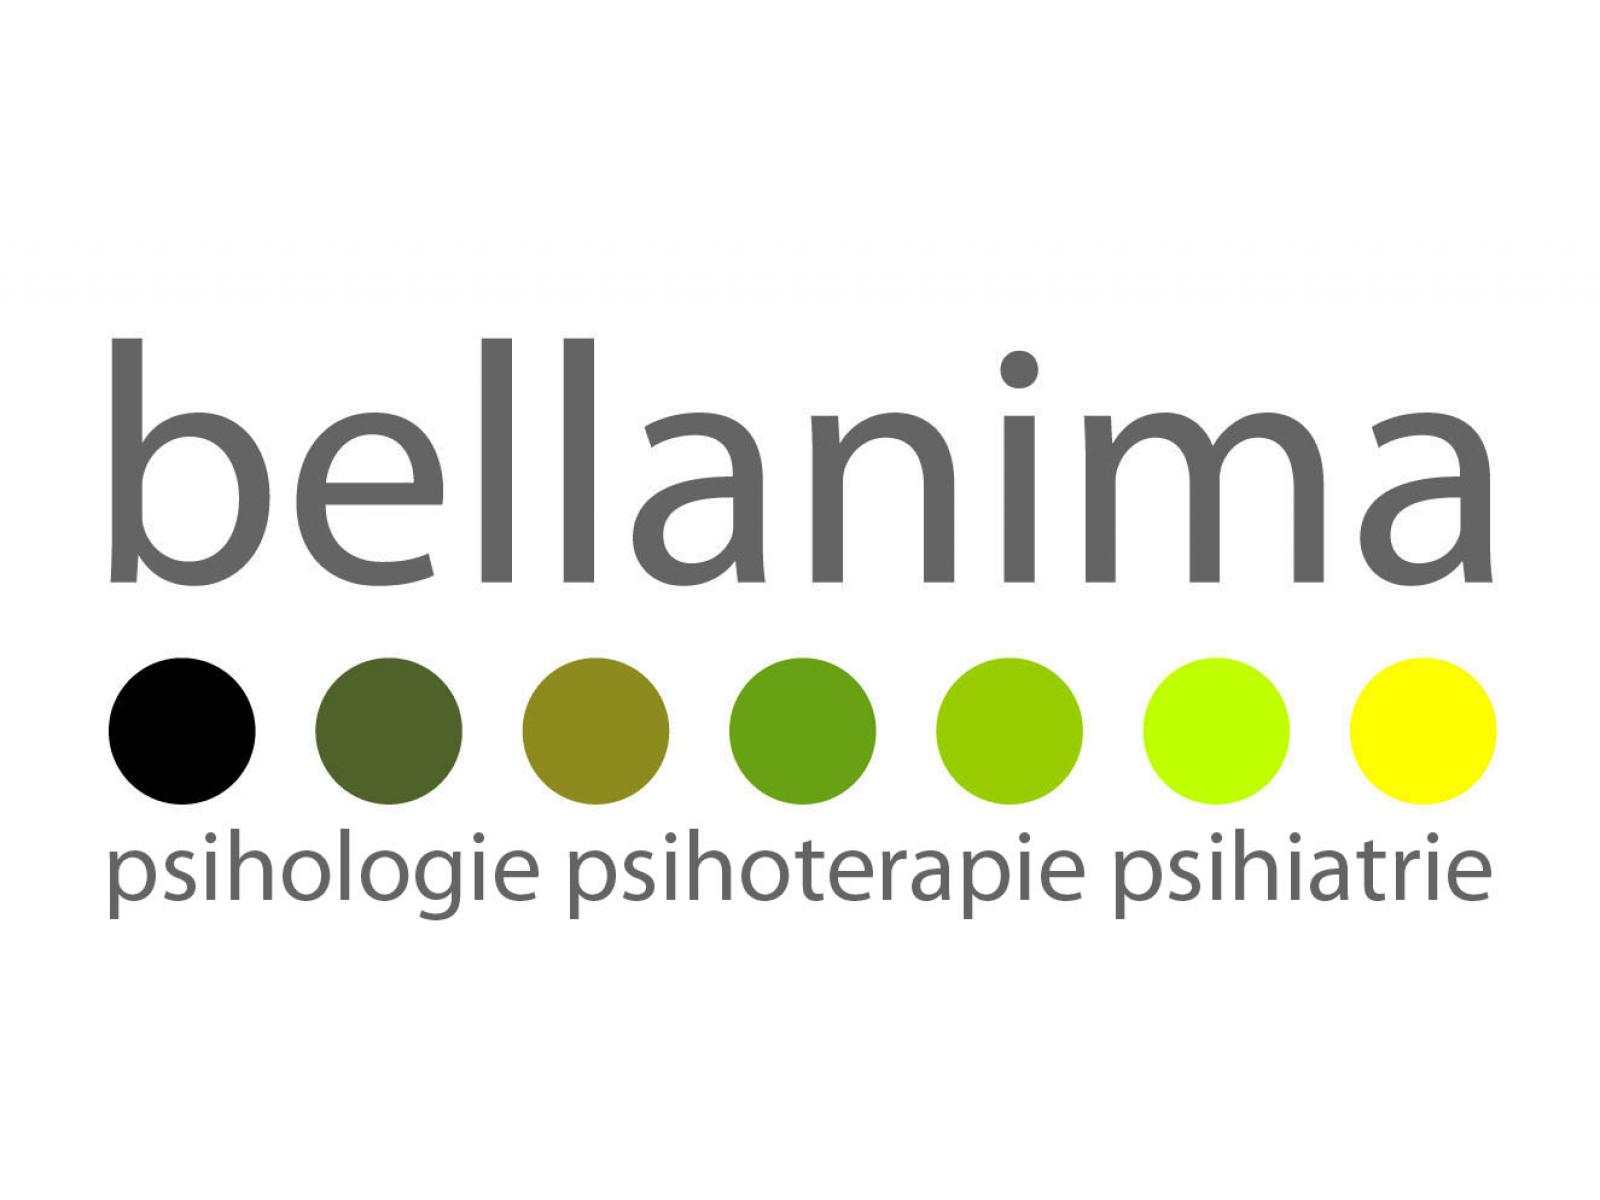 Centrul Medical Bellanima - Sigla_Bellanima_RGB_-_psihologie_psihoterapie_psihiatrie_last.jpg